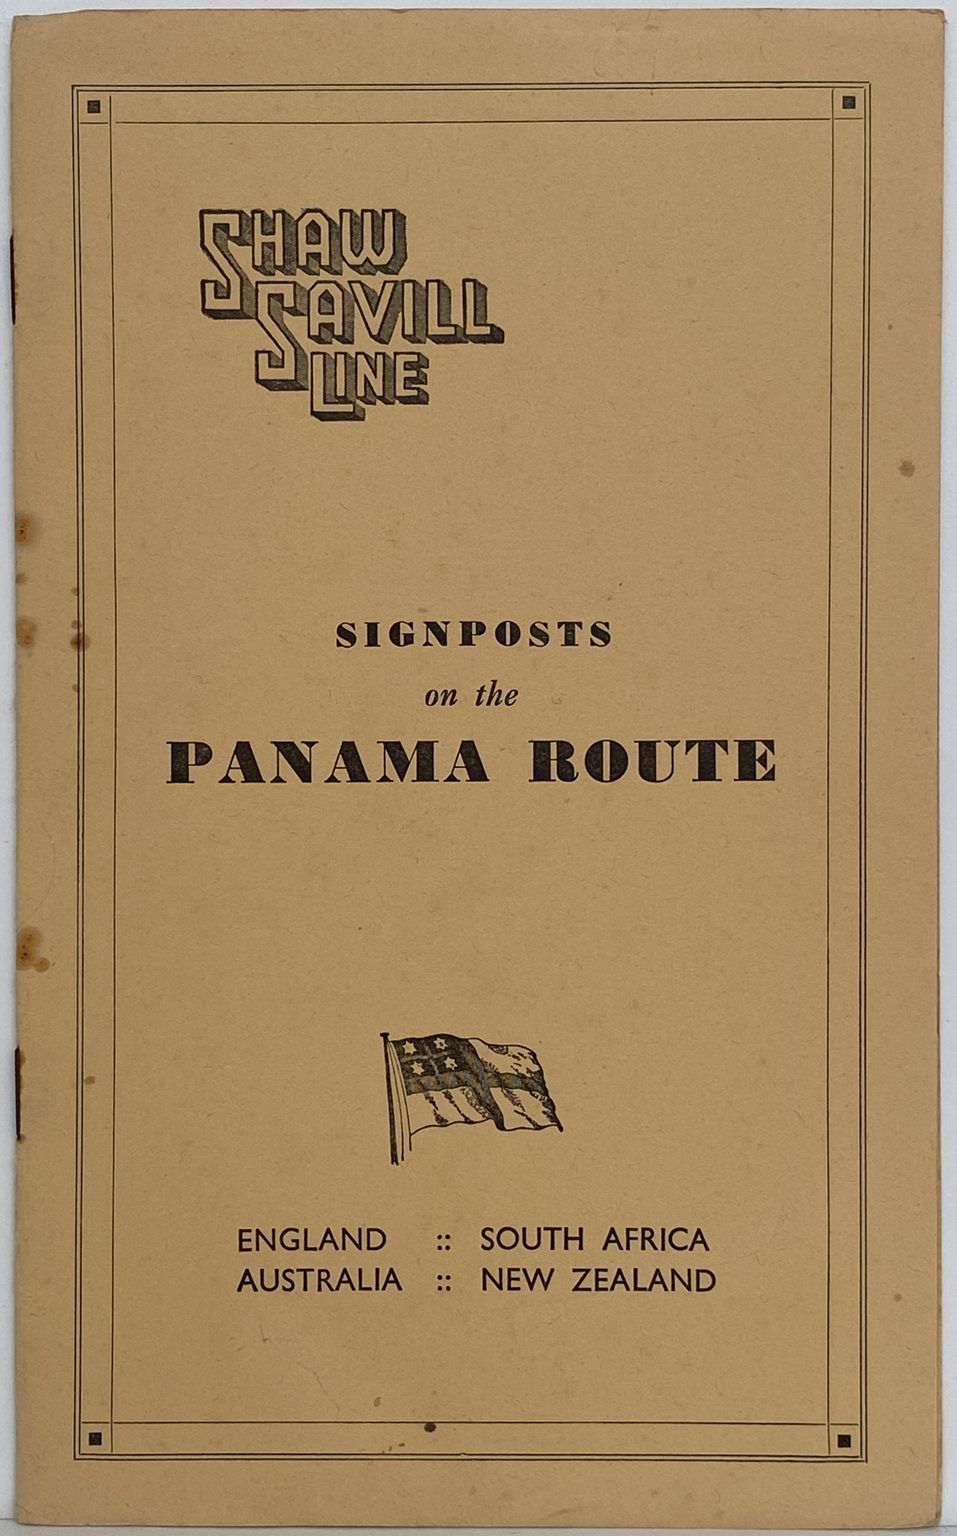 MARITIME MEMORABILIA: Shaw Savill line - Signposts on the Panama Route 1950s